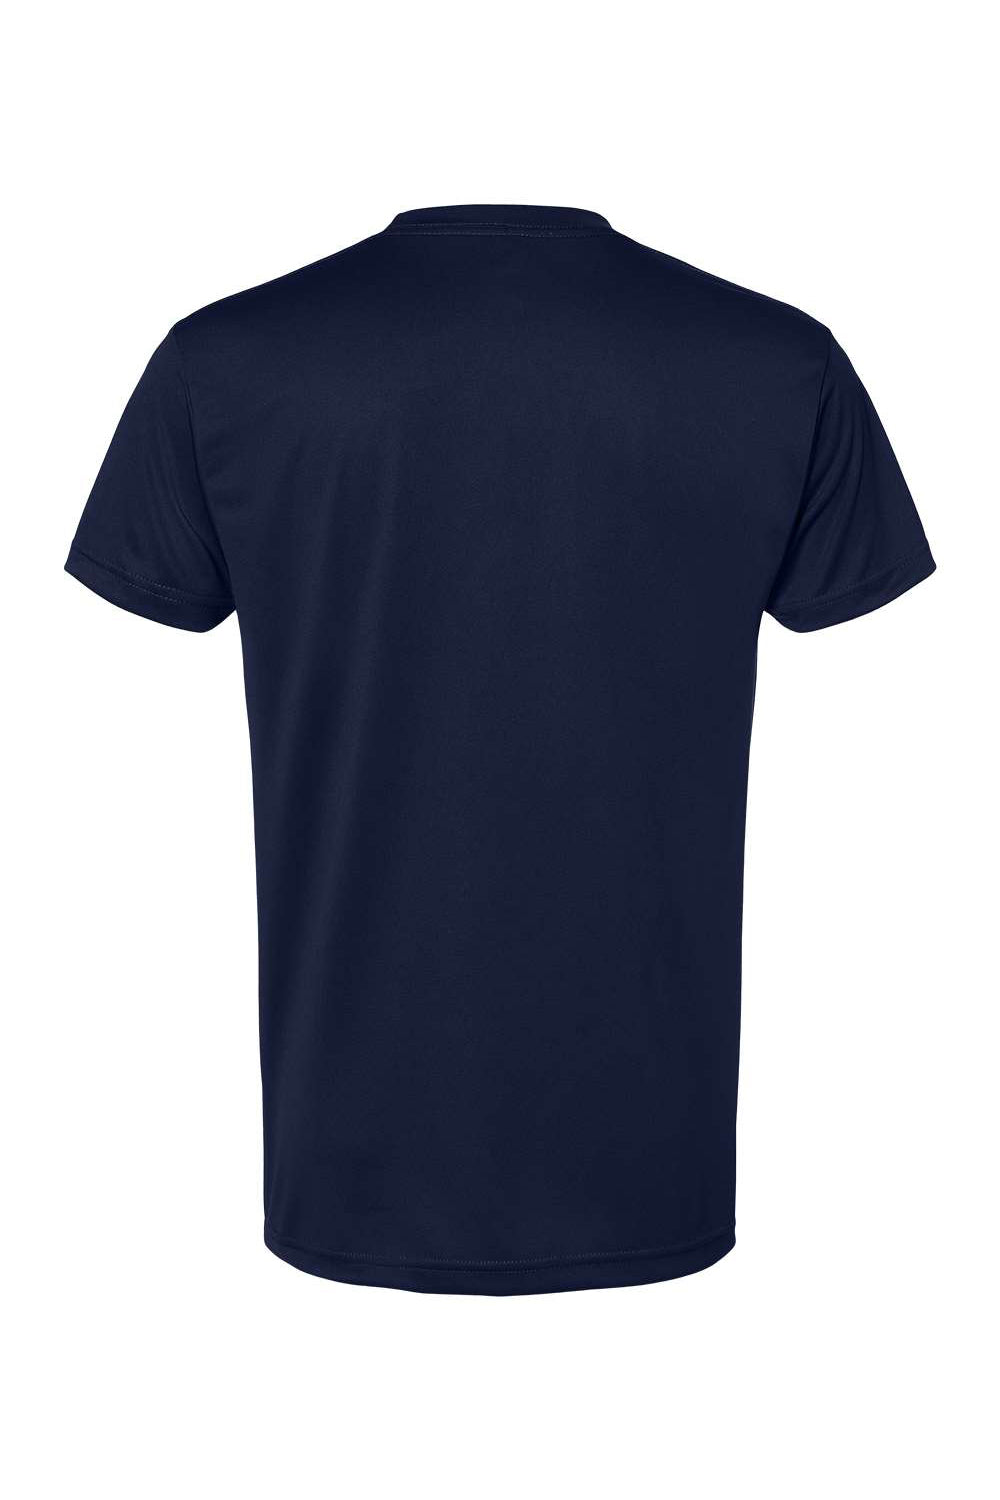 Bayside 5300 Mens USA Made Performance Short Sleeve Crewneck T-Shirt Navy Blue Flat Back